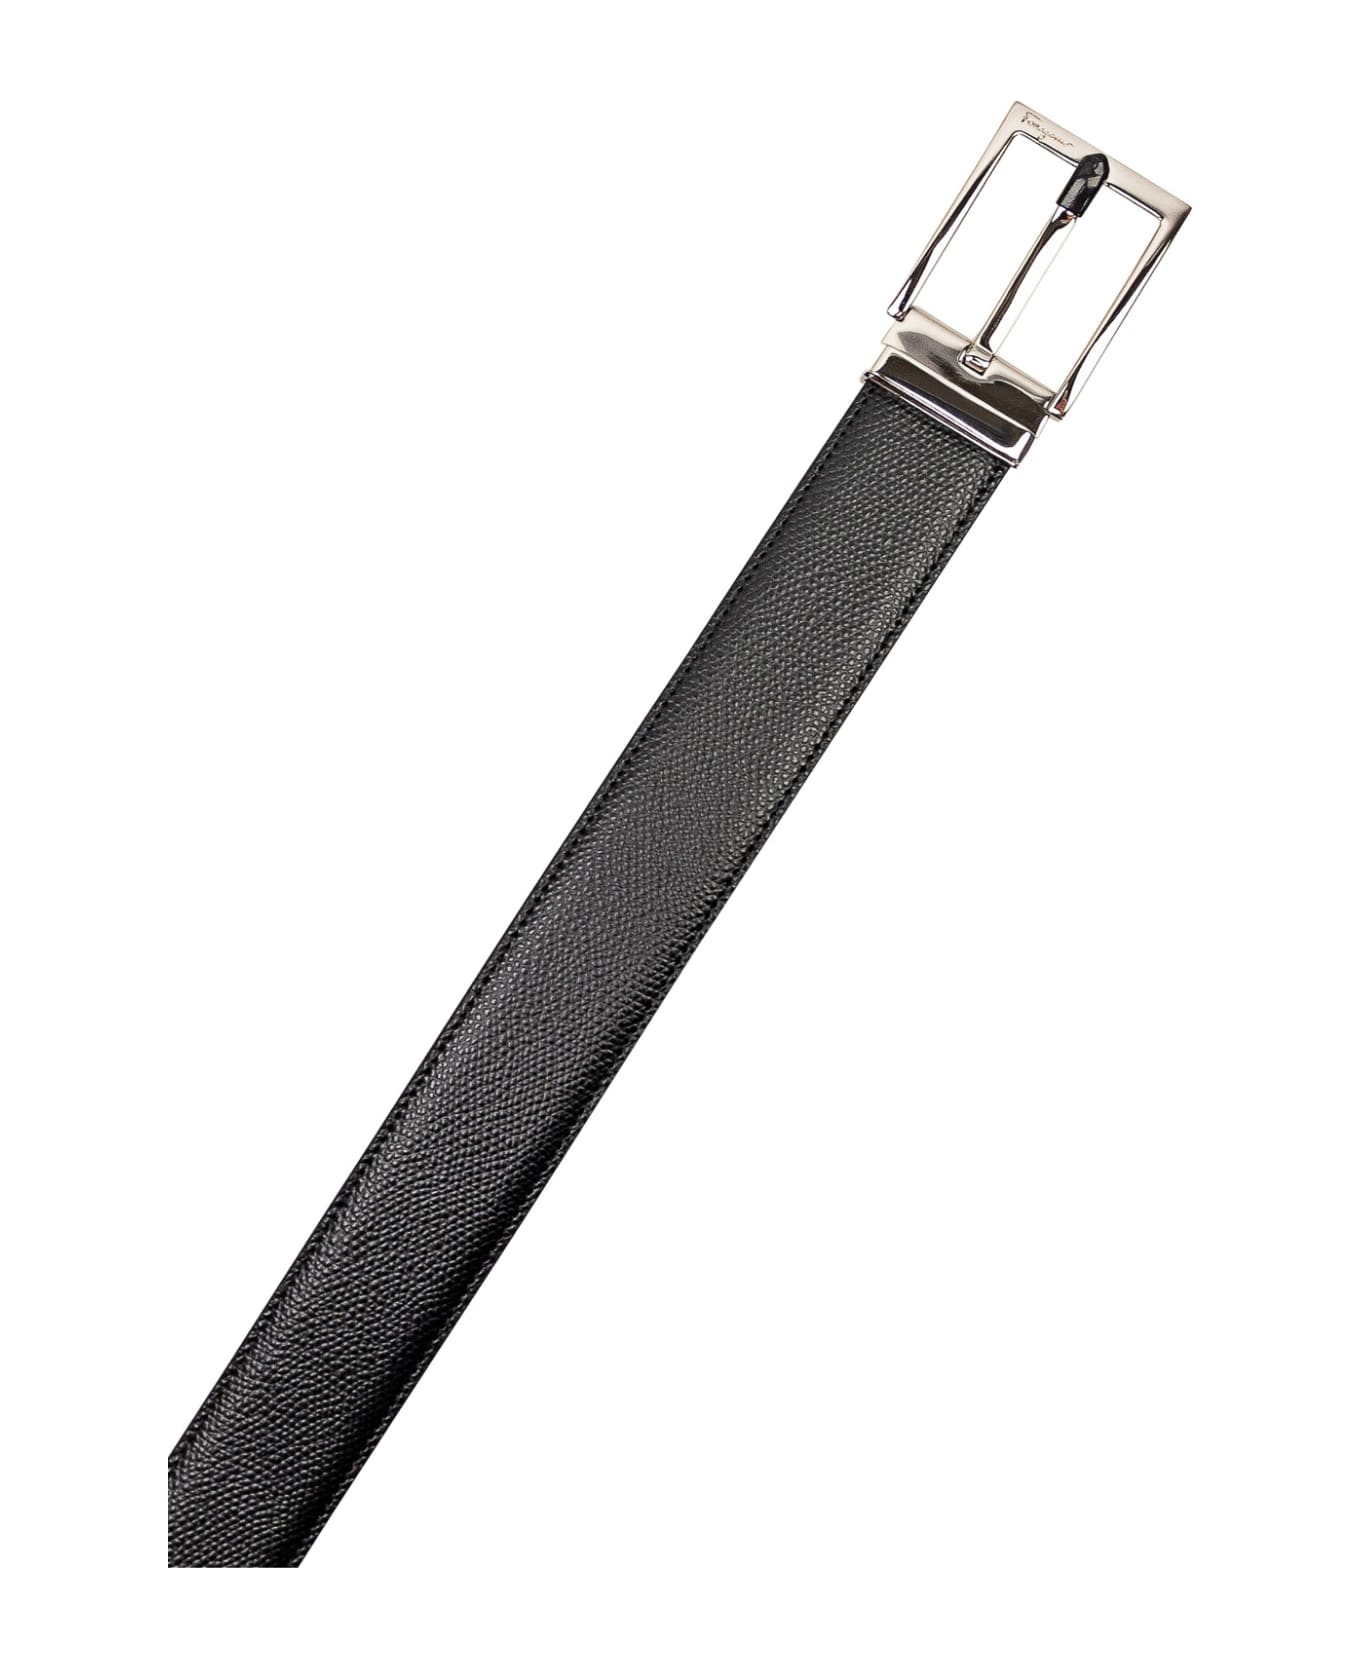 Ferragamo Reversible Leather Belt - NERO/HICKORY